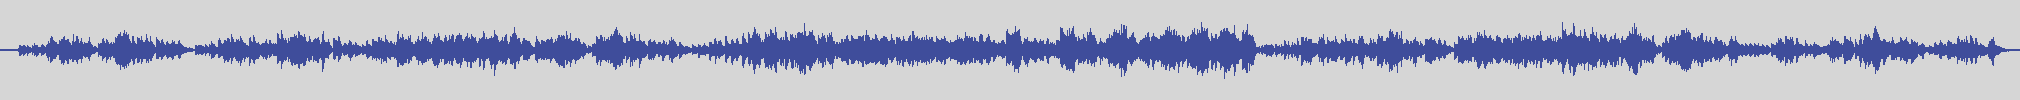 big_music_classic [BMC003] Frédéric Chopin, C Red - Mazurka Op.59 N.1 [] audio wave form